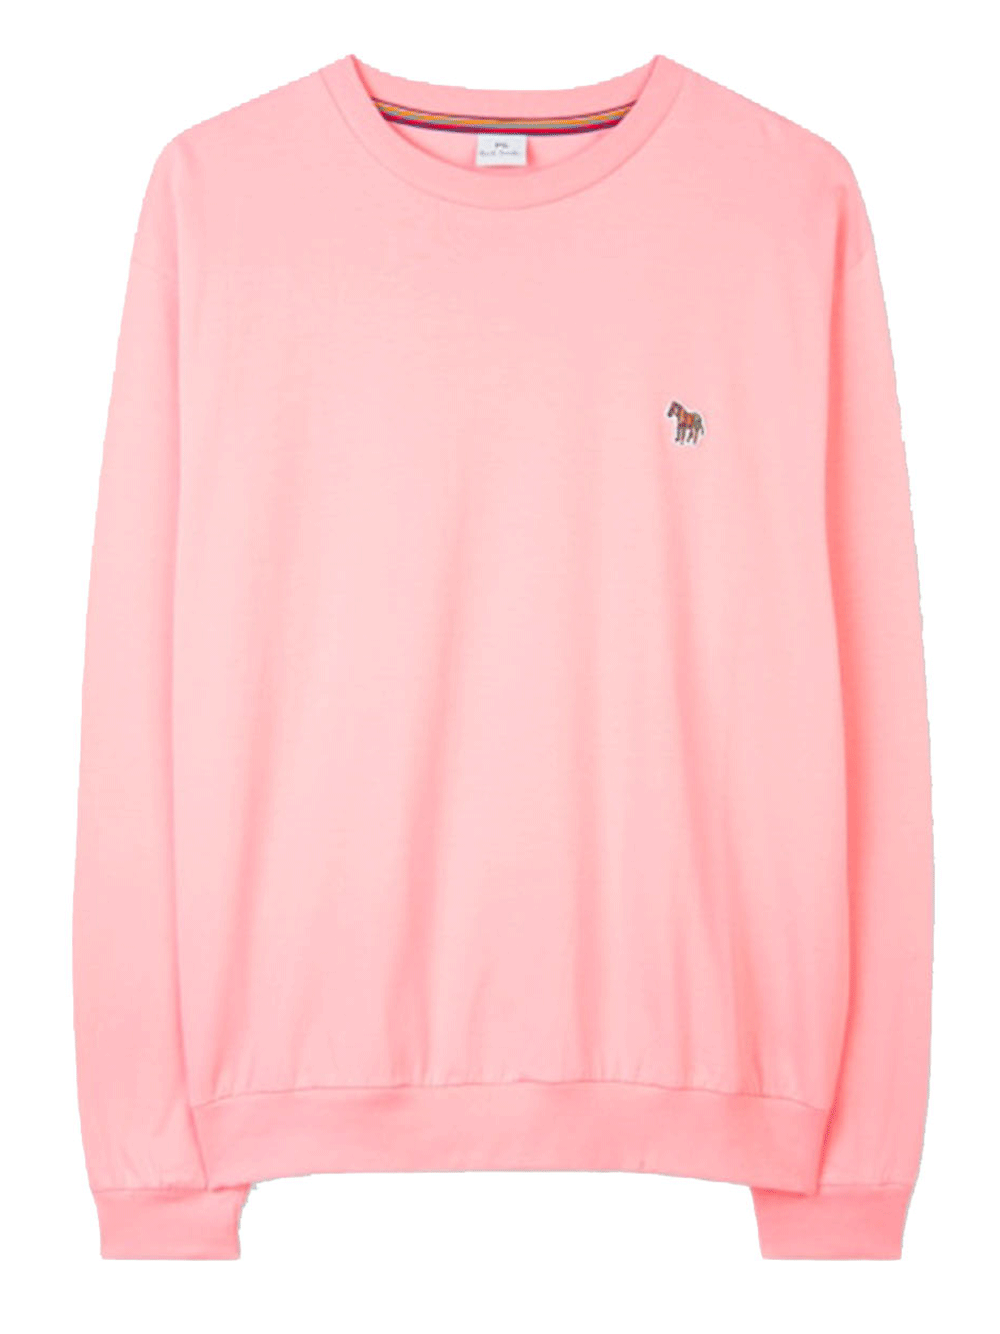 PS Paul Smith Womens Long Slv Zebra T-Shirt Pink 1